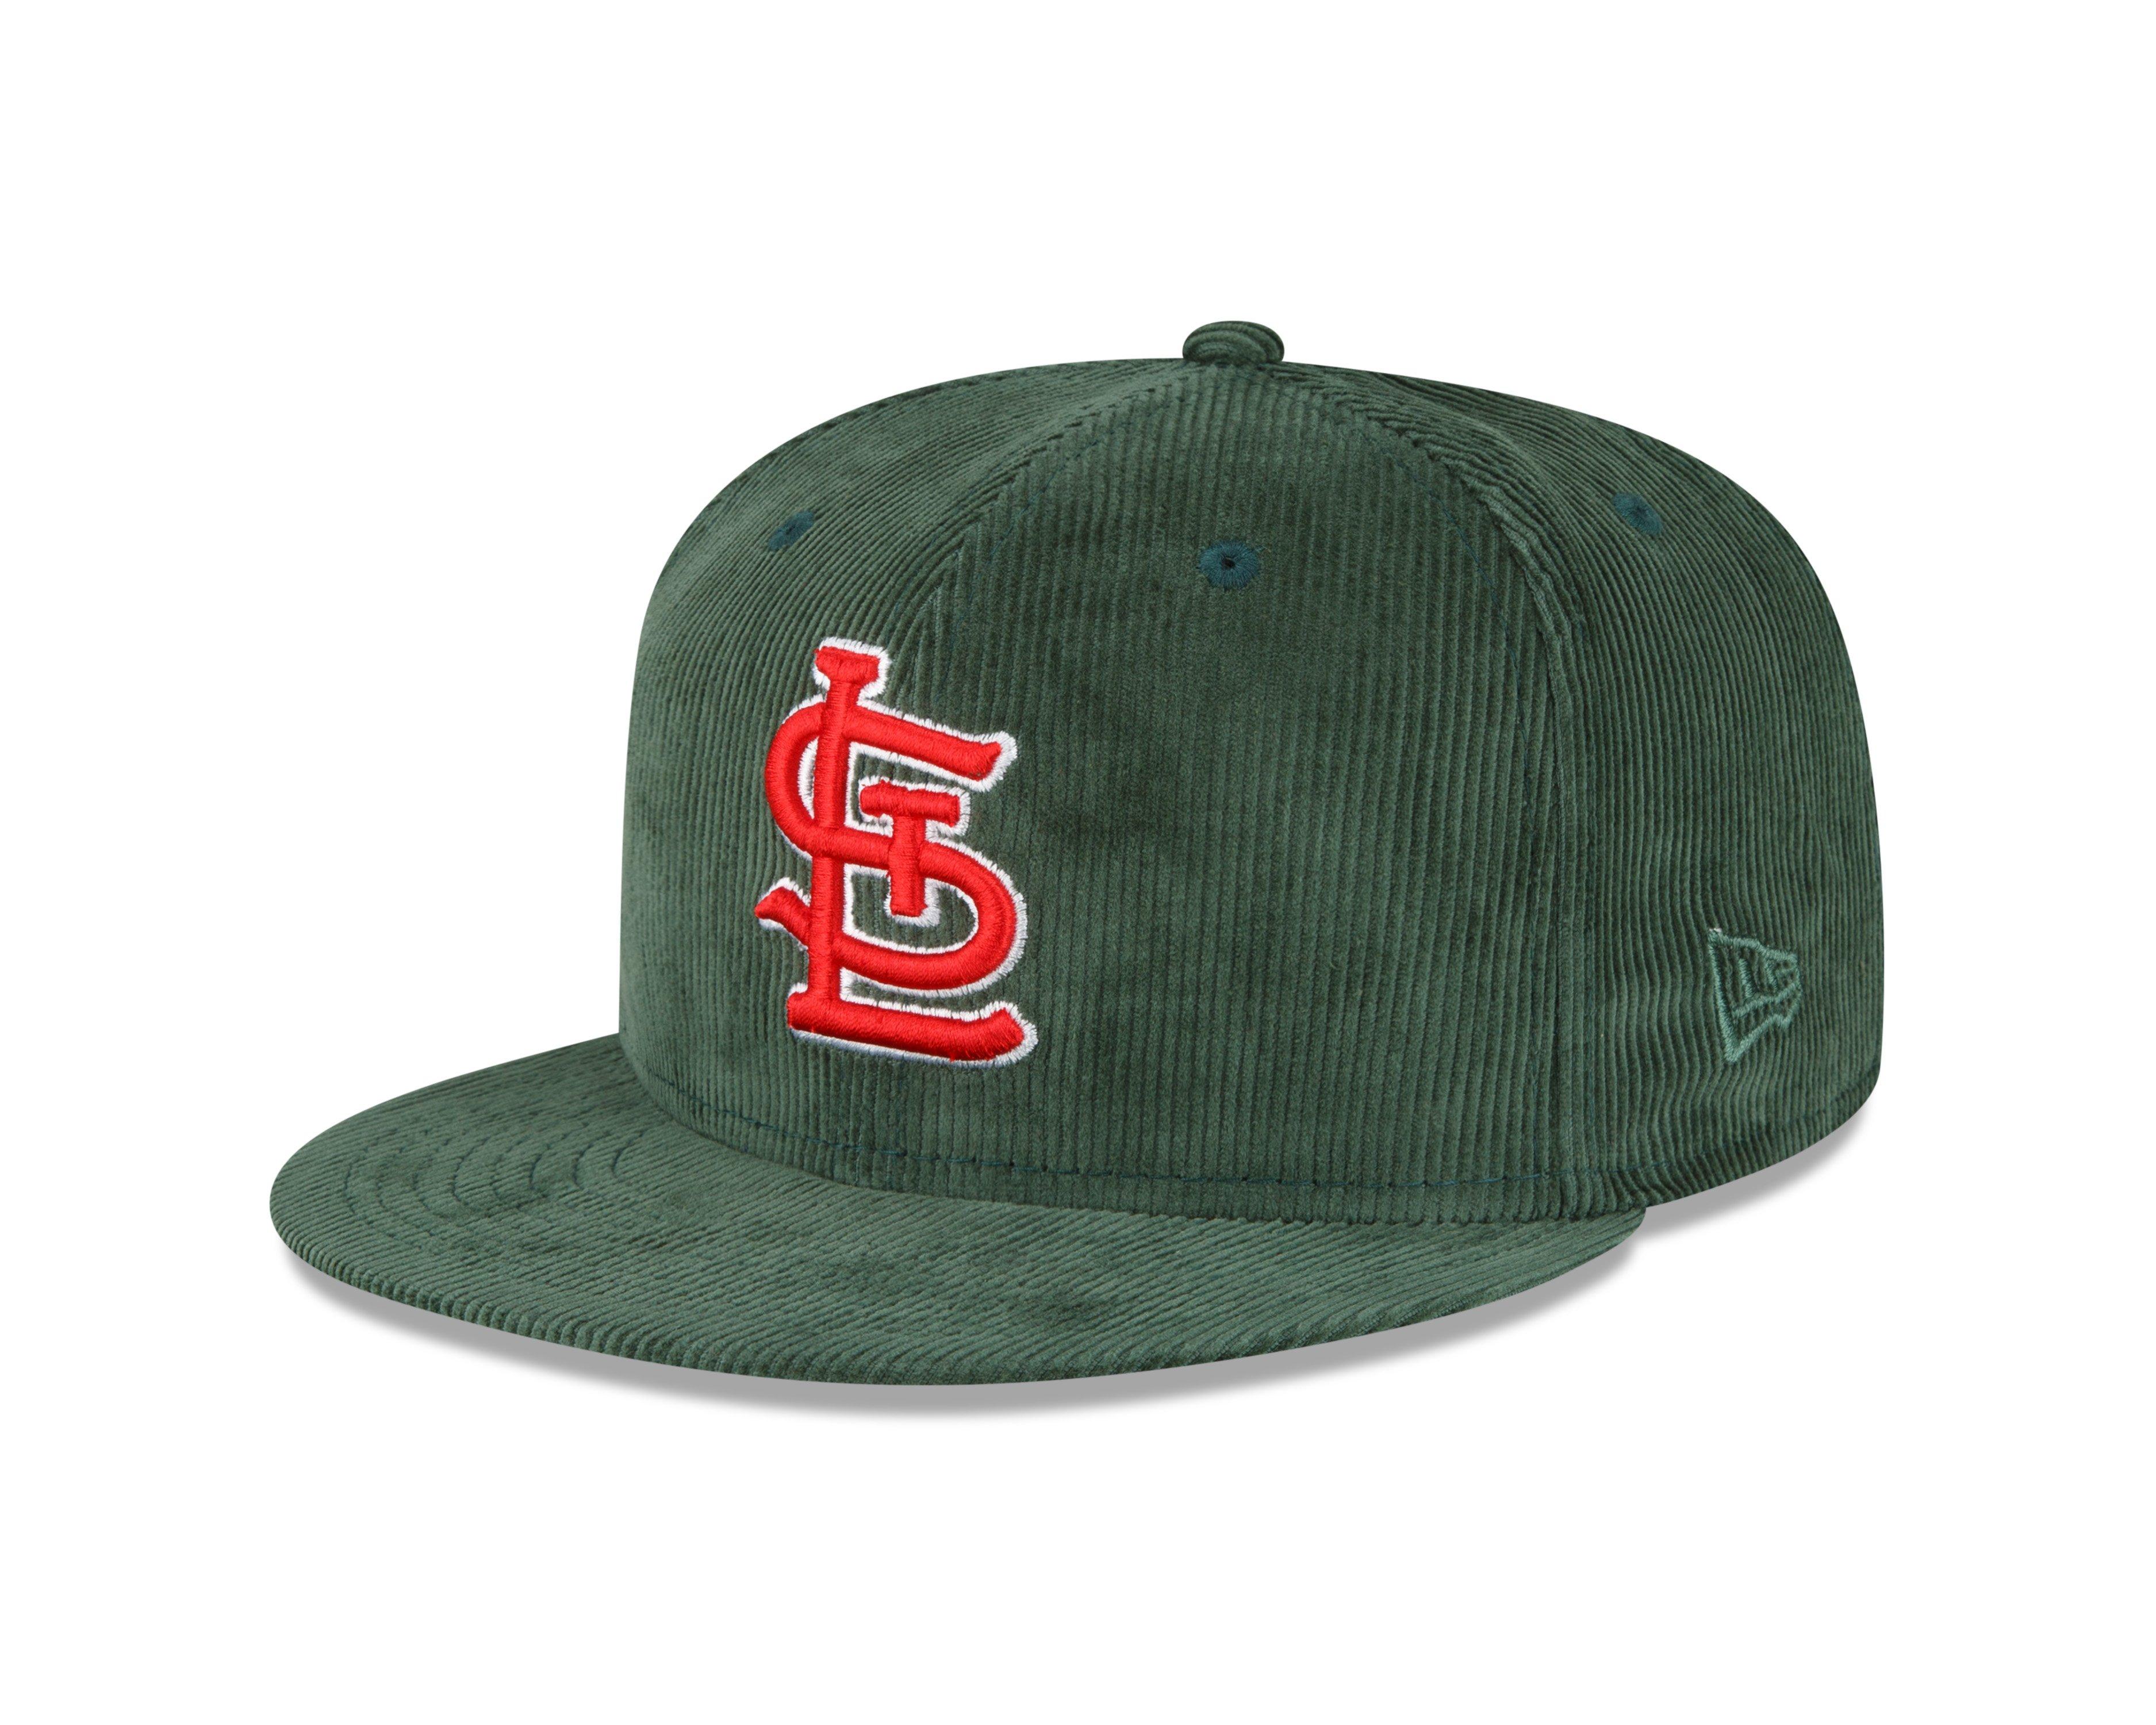 St. Louis Cardinals Nike Team Vintage Strapback Hat Black Red MLB Dad Cap